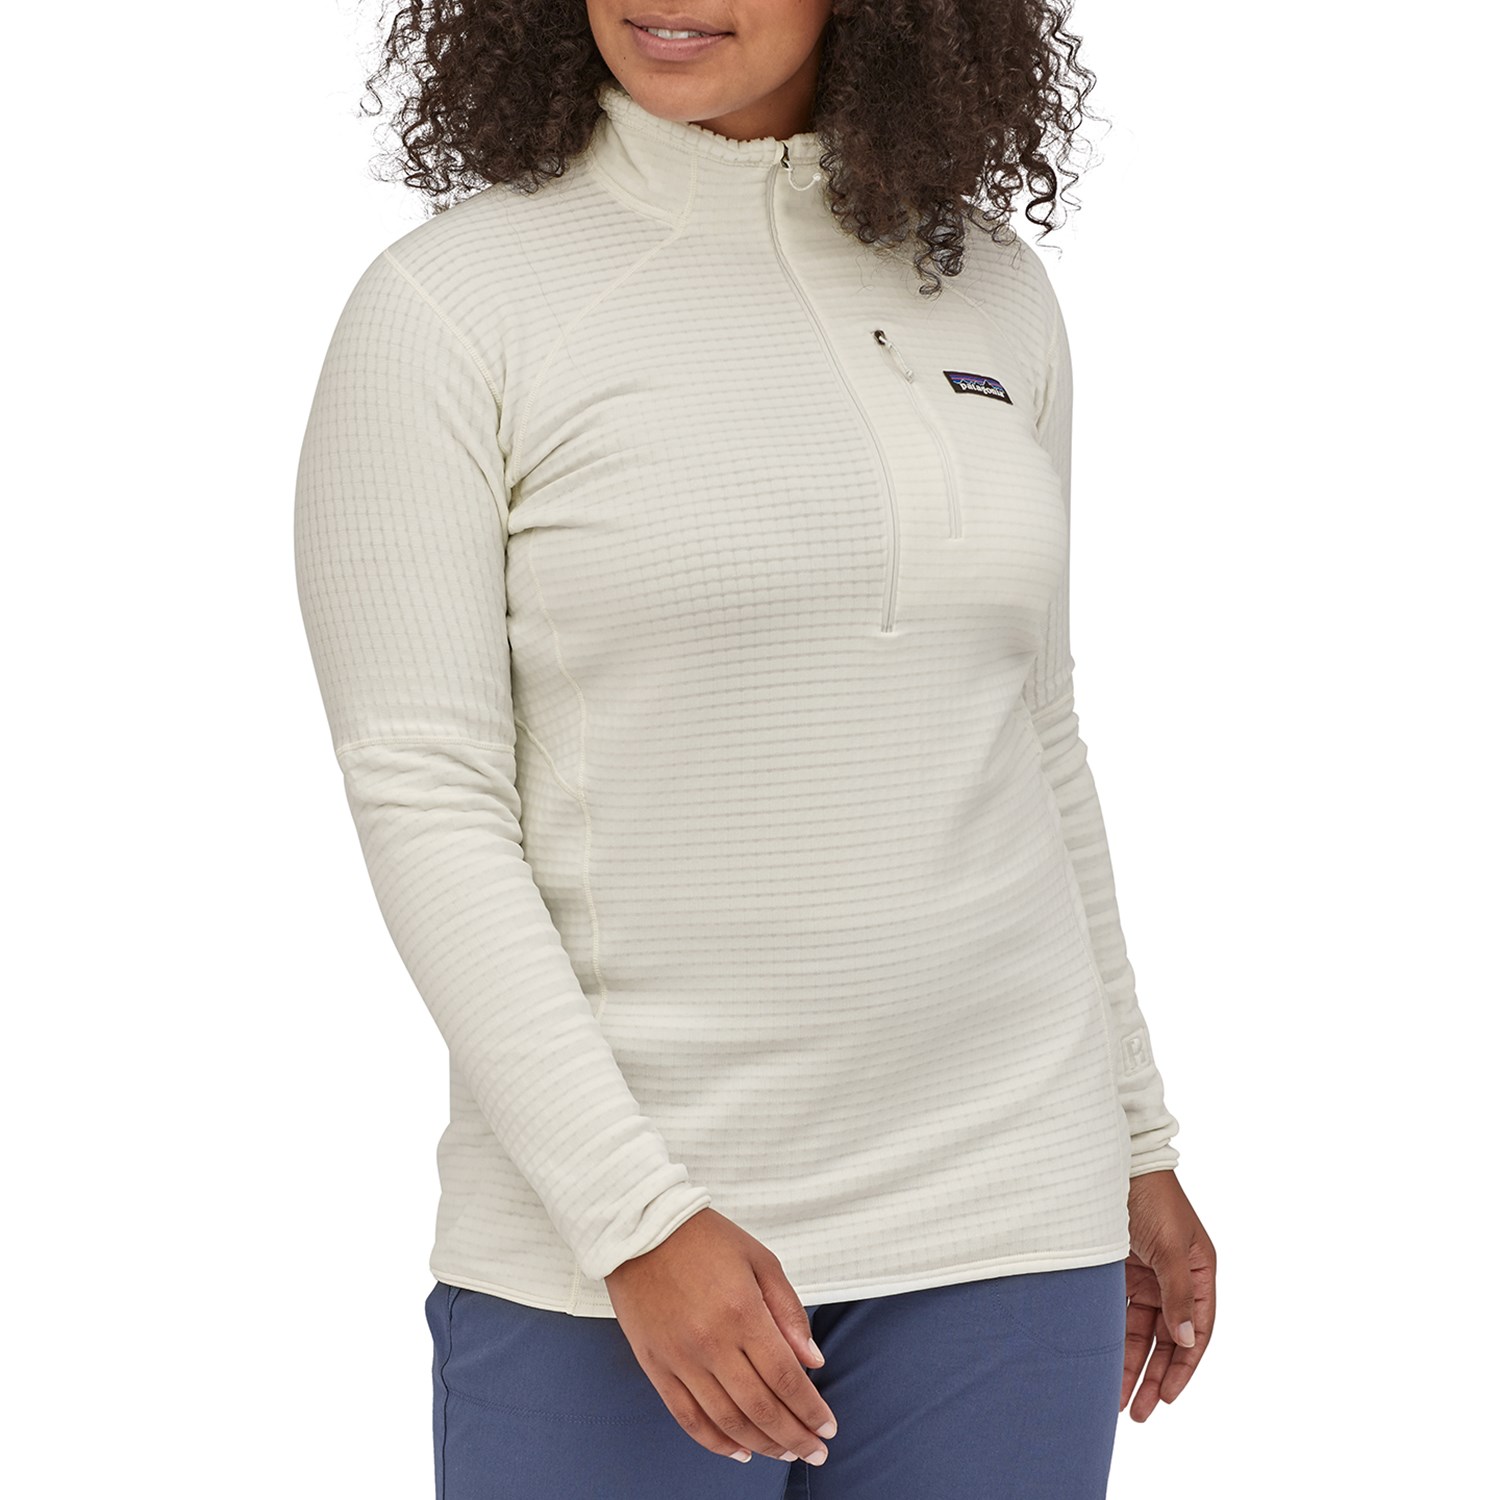 Пуловер Patagonia R1 женский, белый пуловер размер единый белый